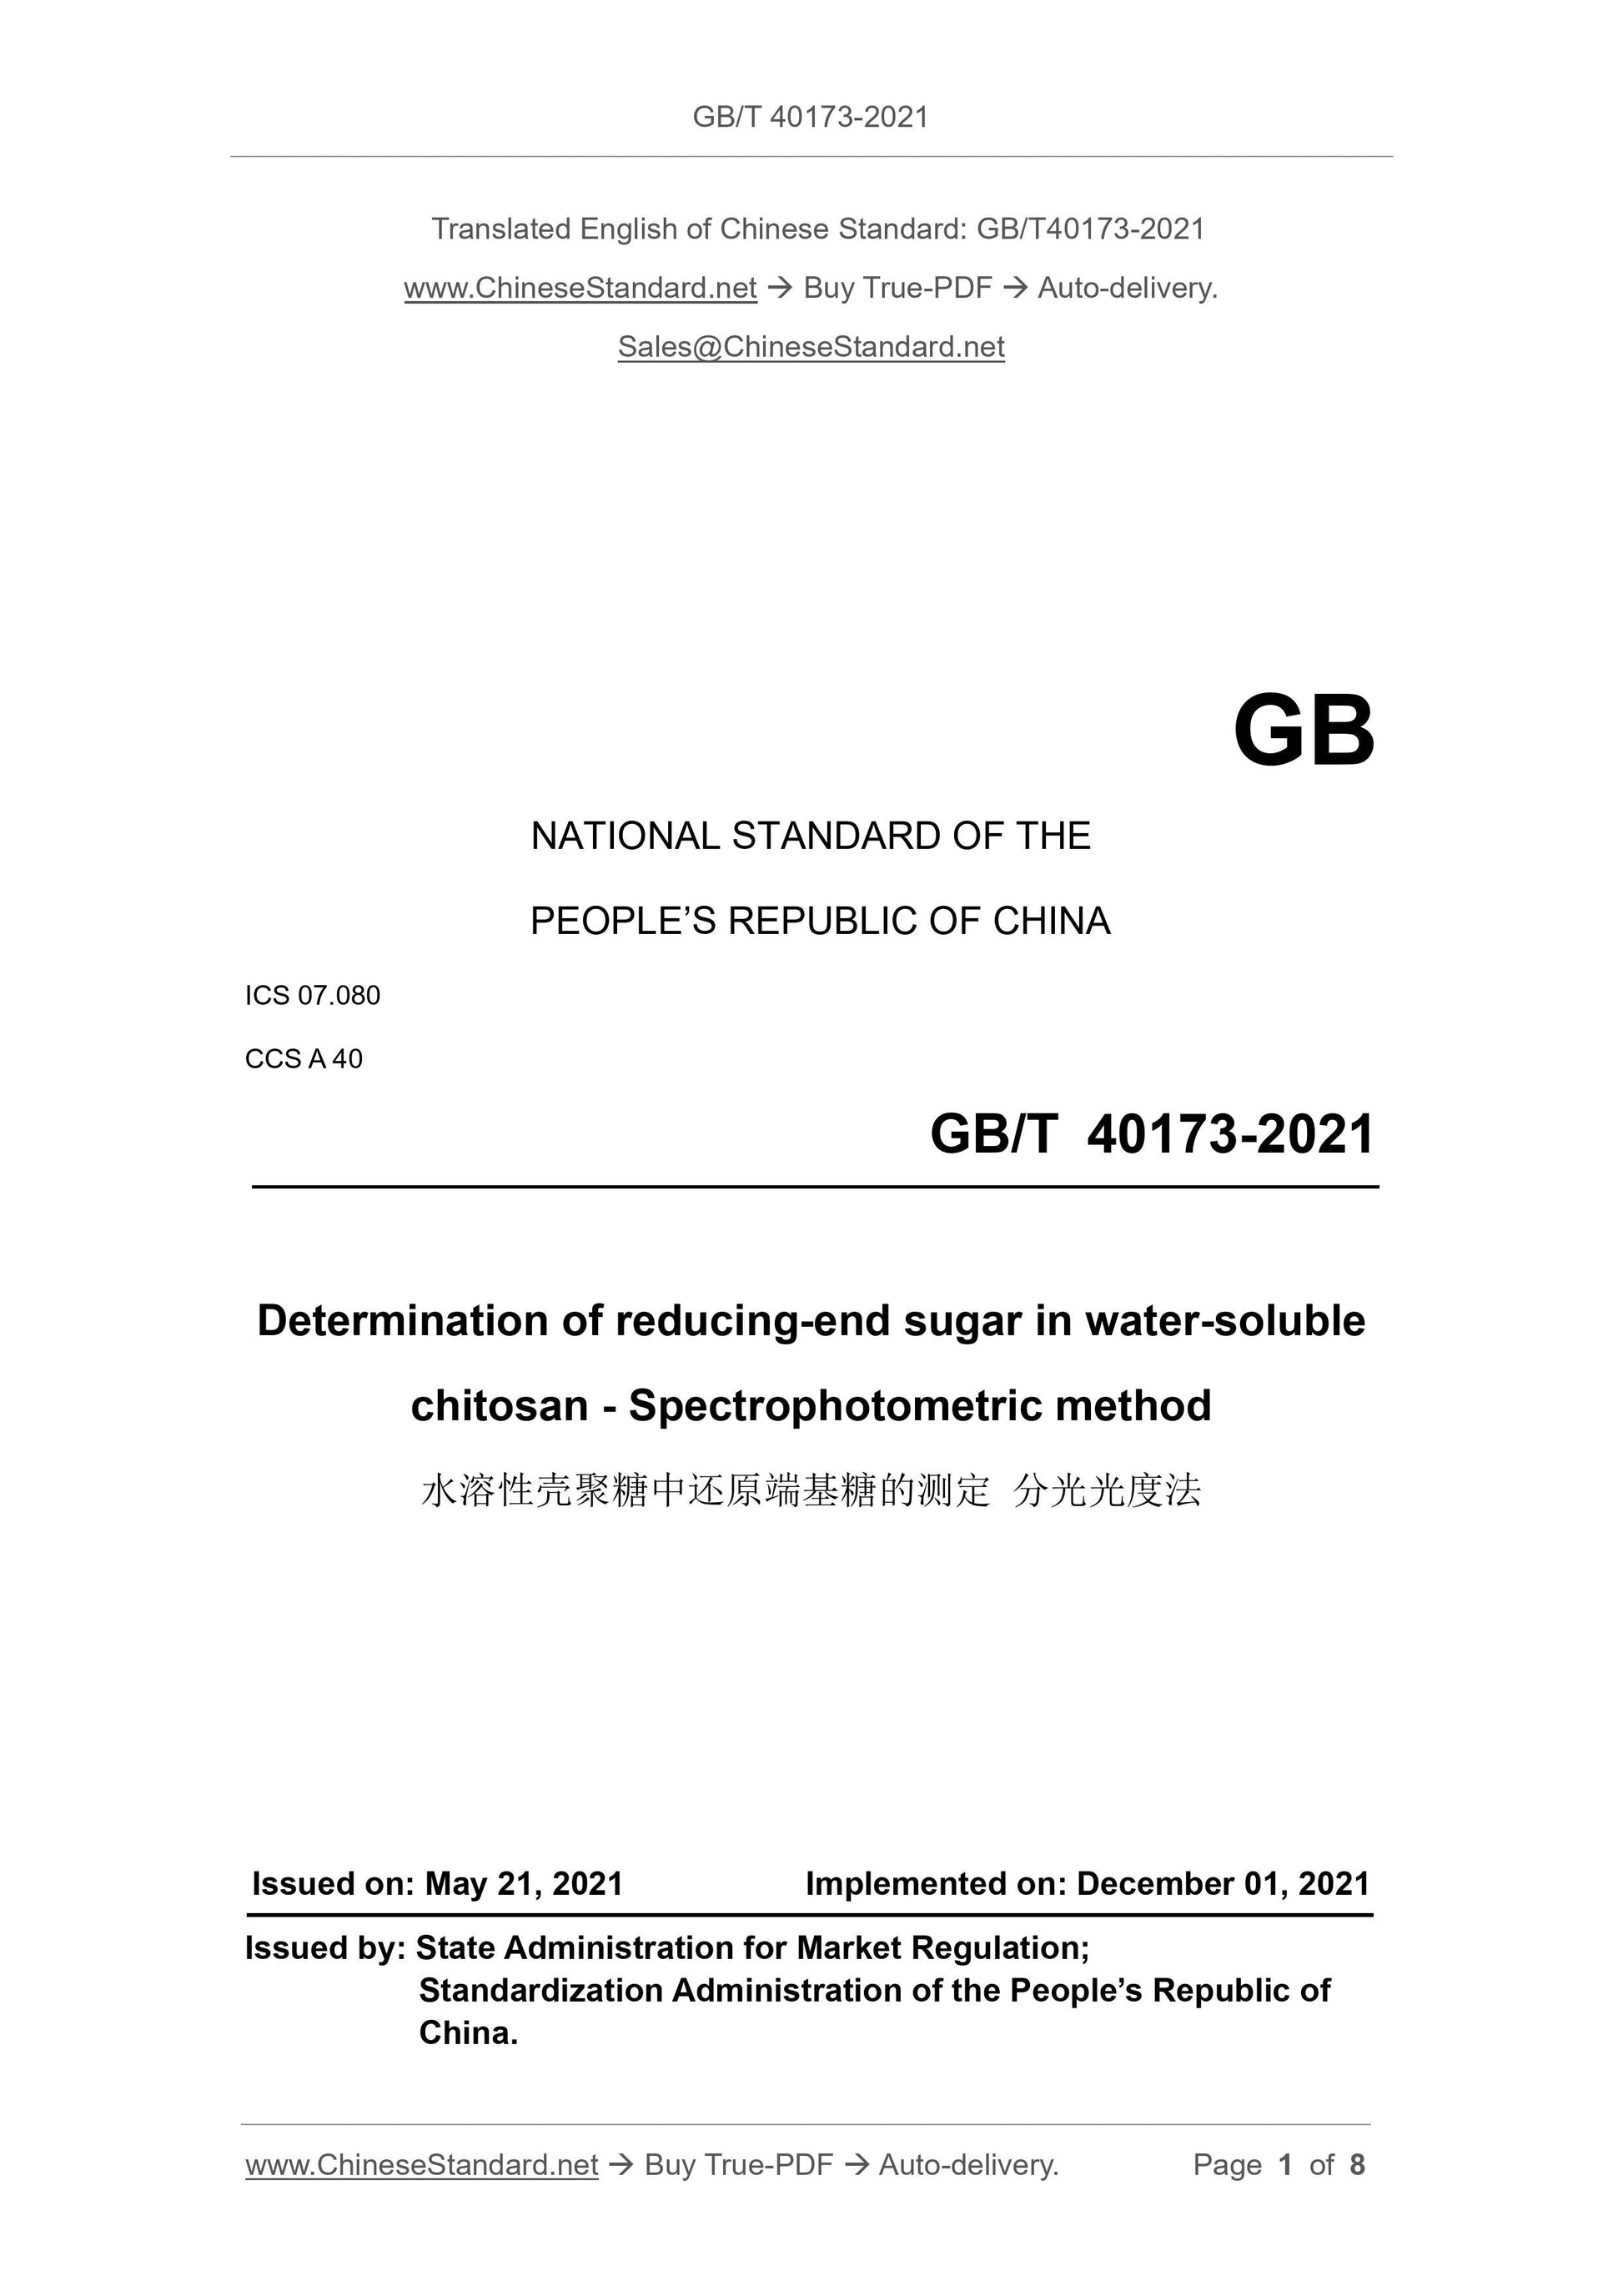 GBT40173-2021 Page 1